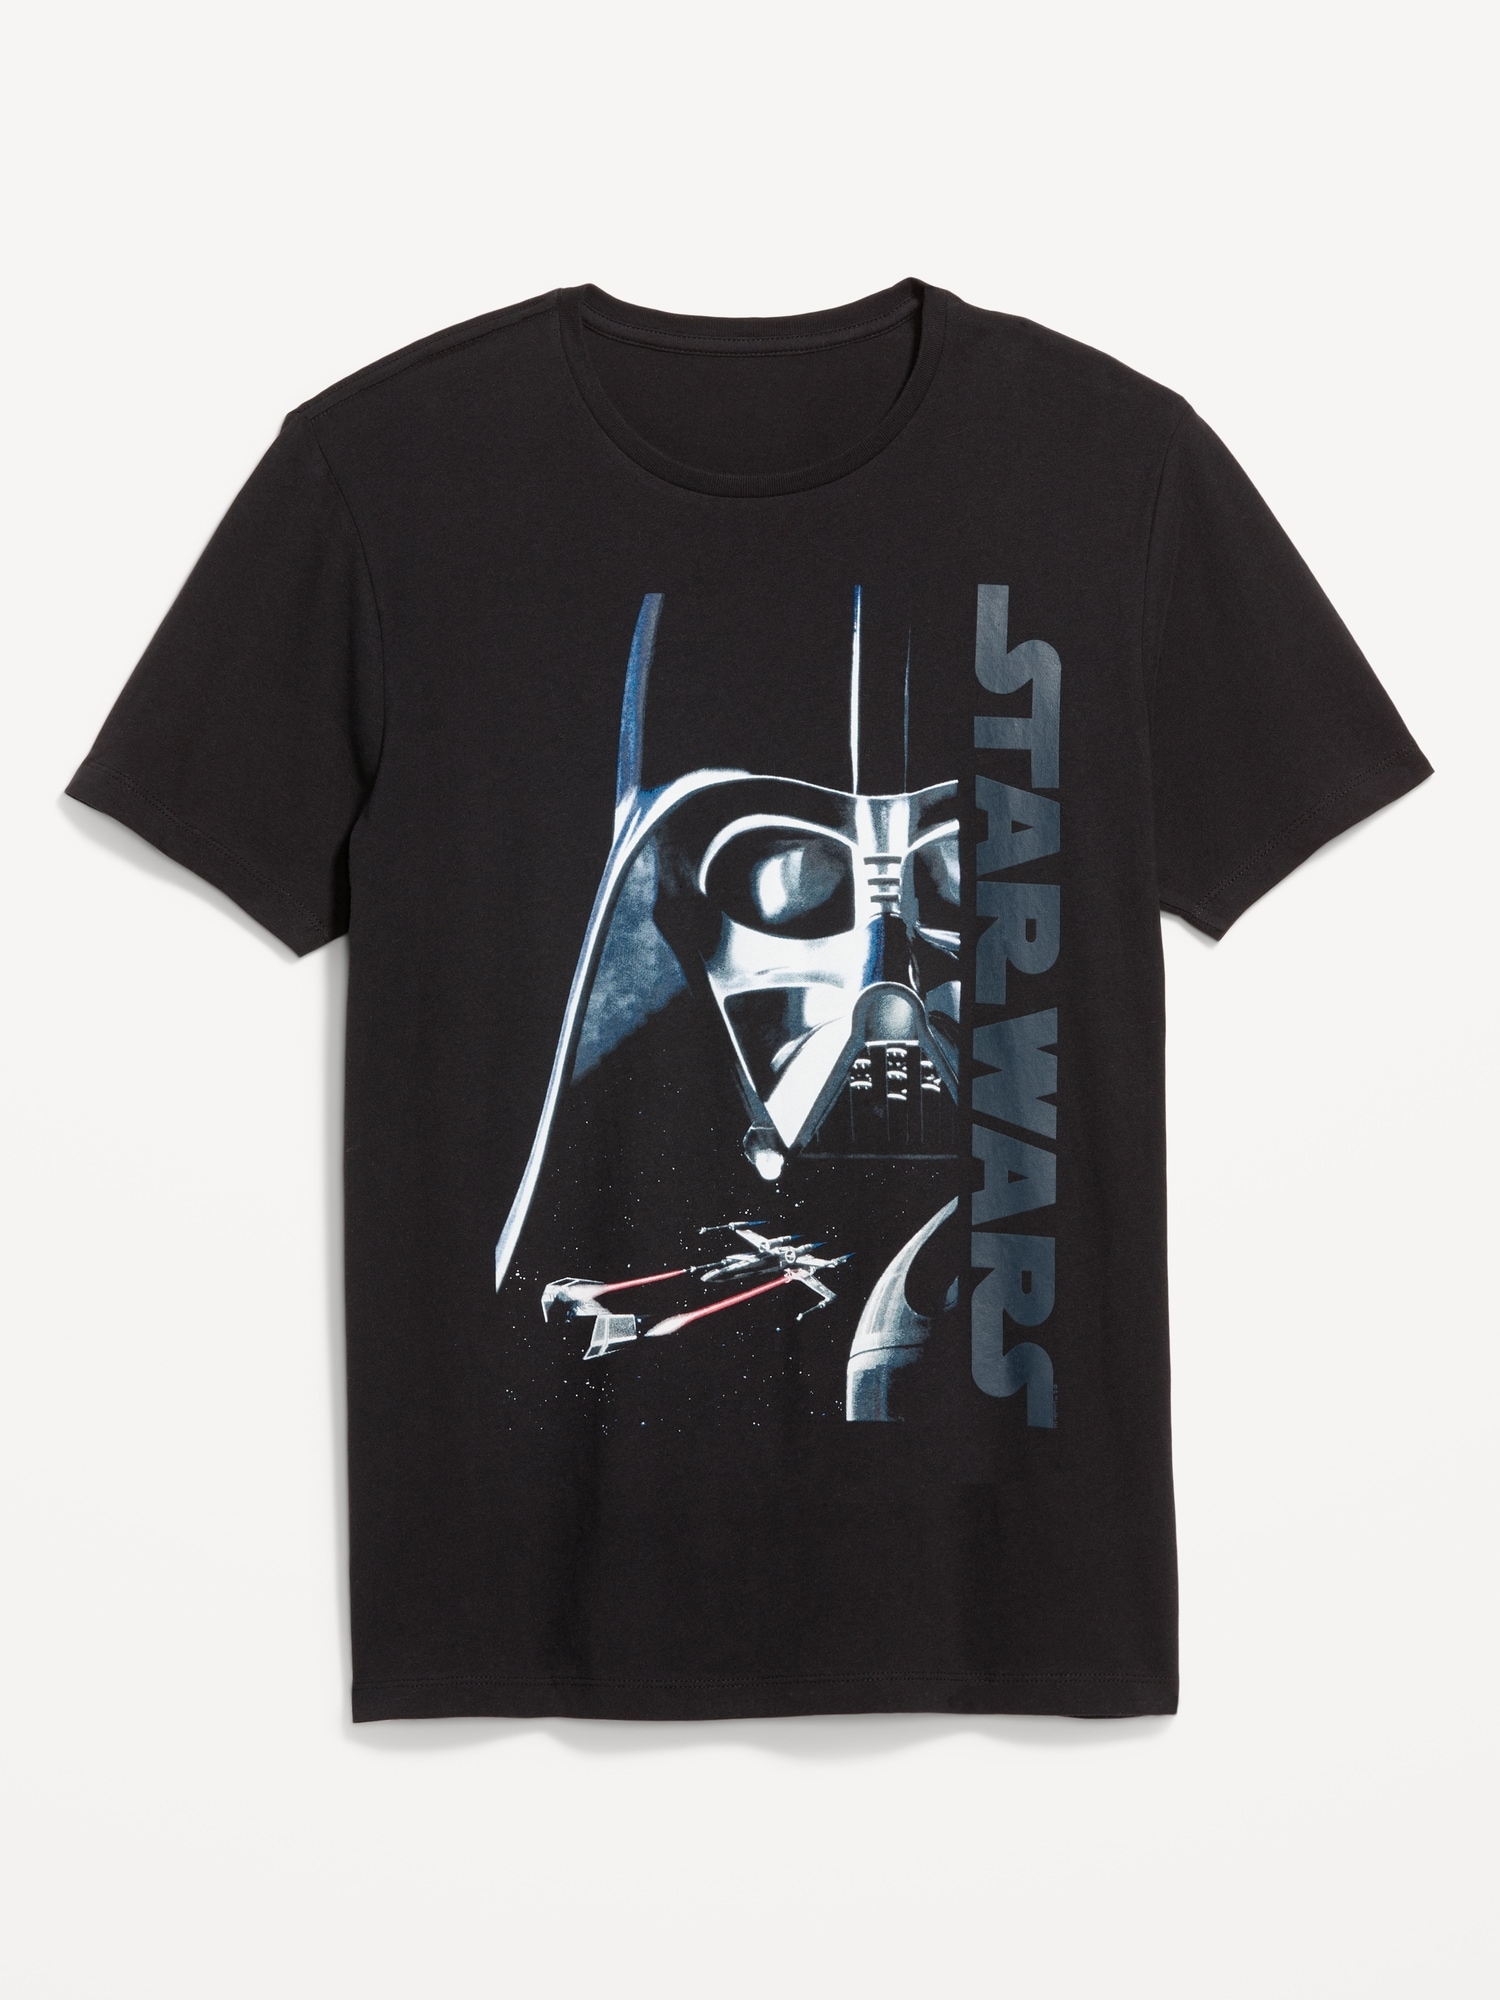 Star Wars Vader Gender-Neutral T-Shirt for Adults